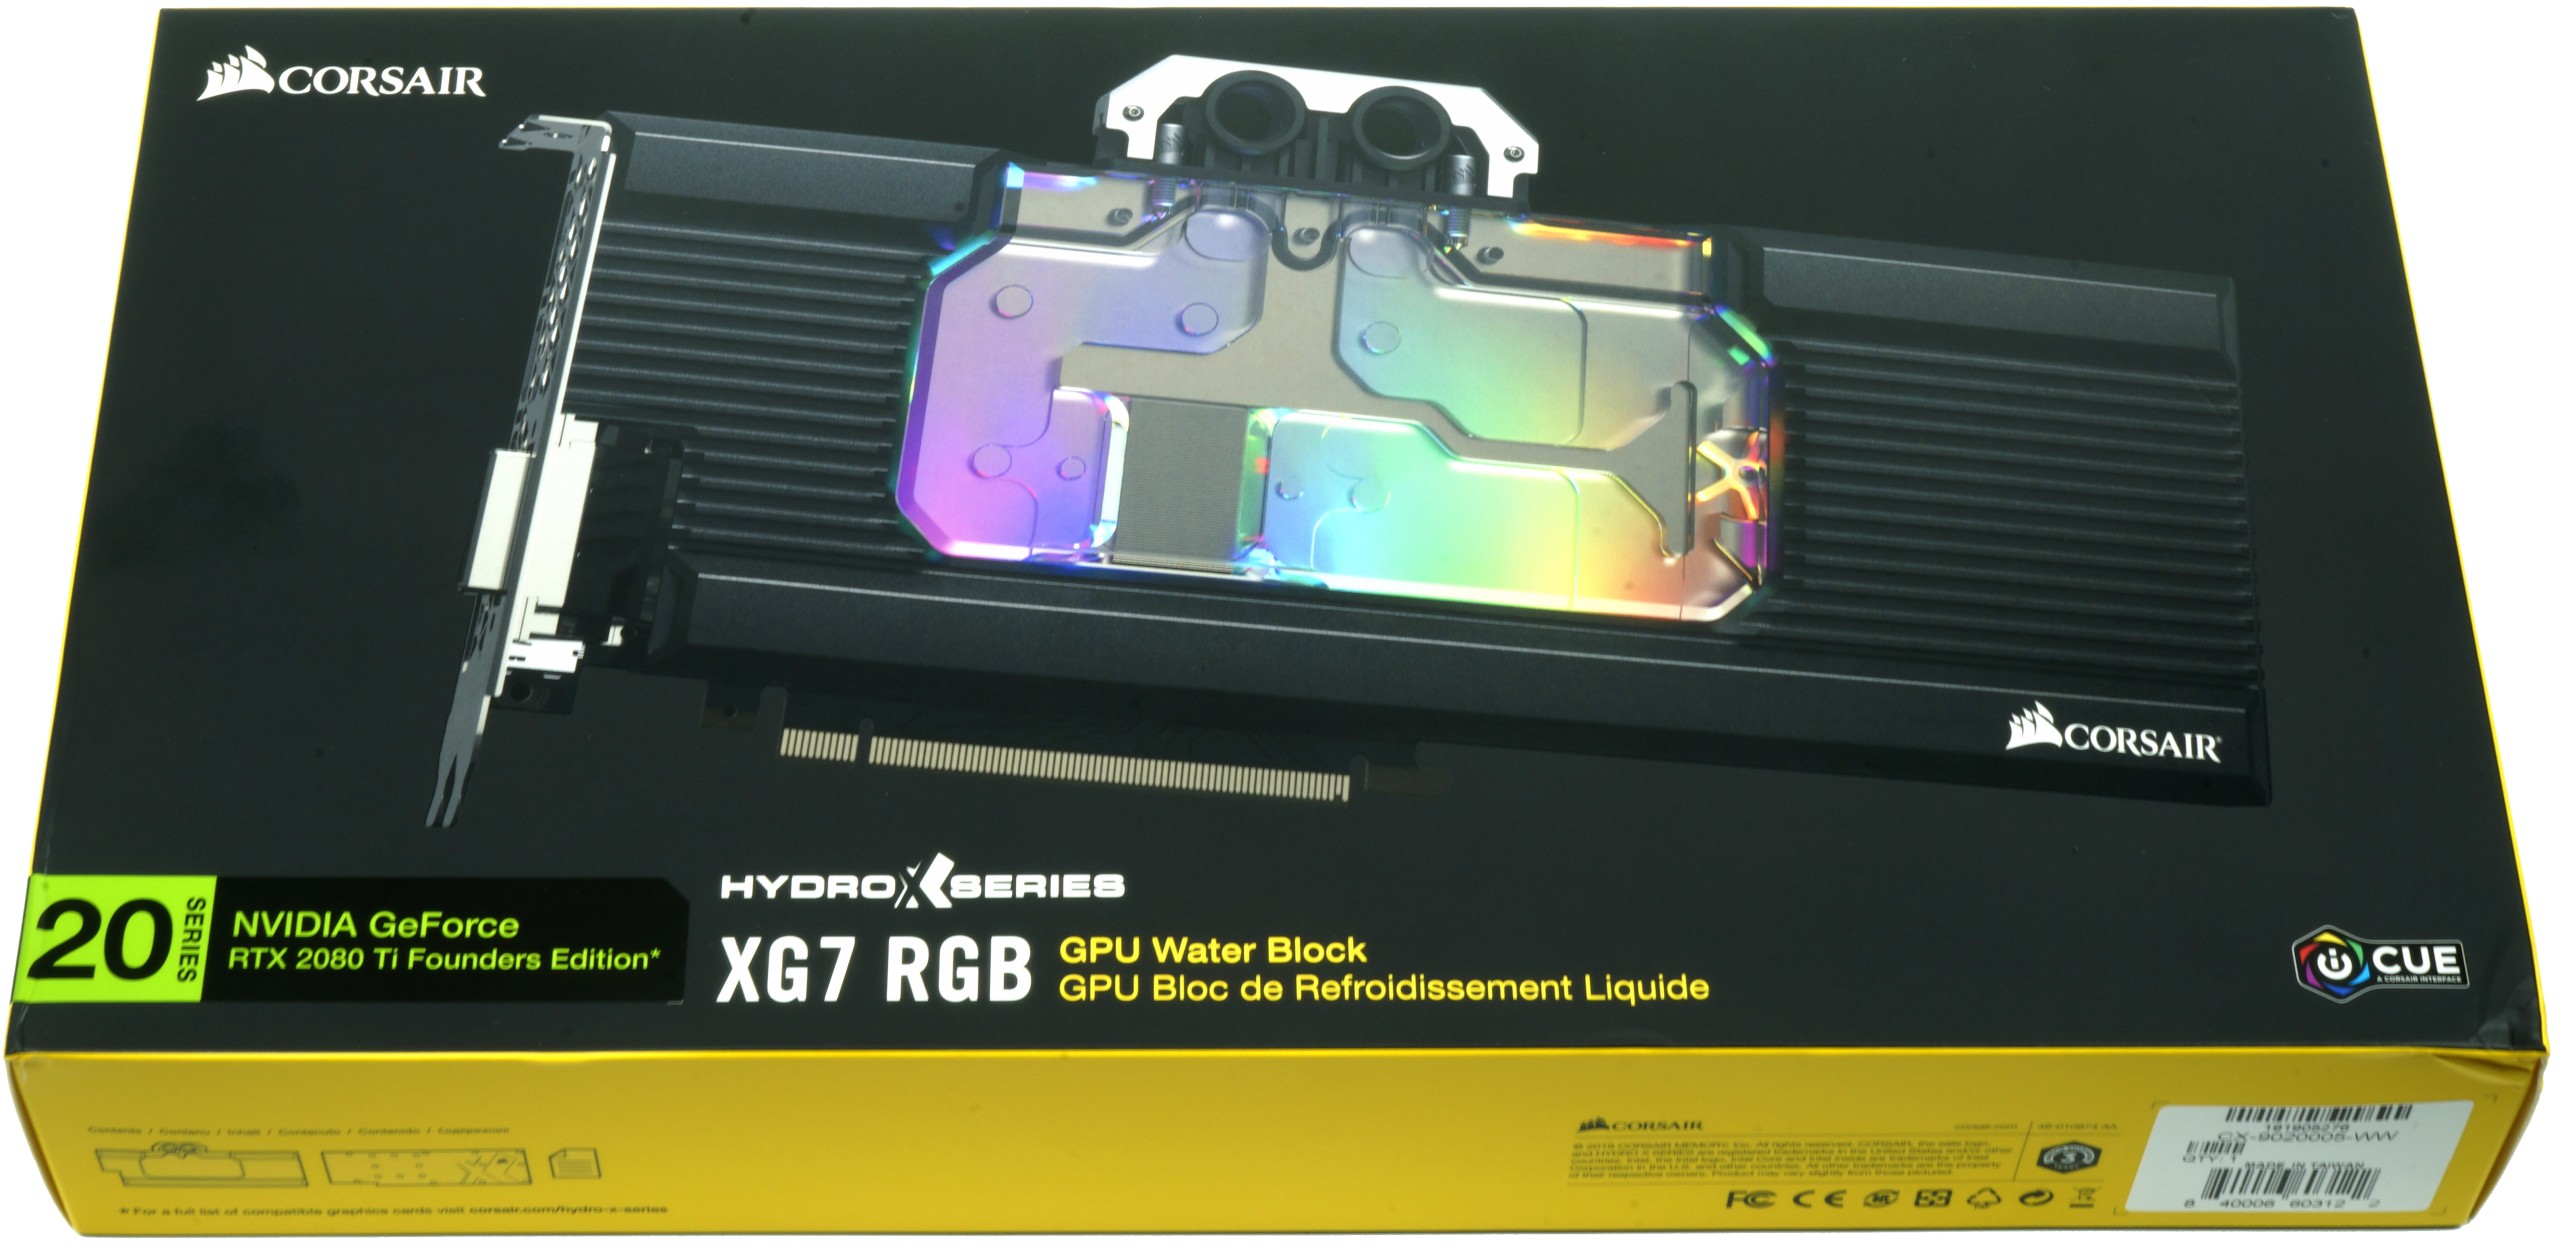 Corsair Hydro X Series XG7 RGB GPU Water Block 20-Series GeForce RTX 2080 Ti Reference 